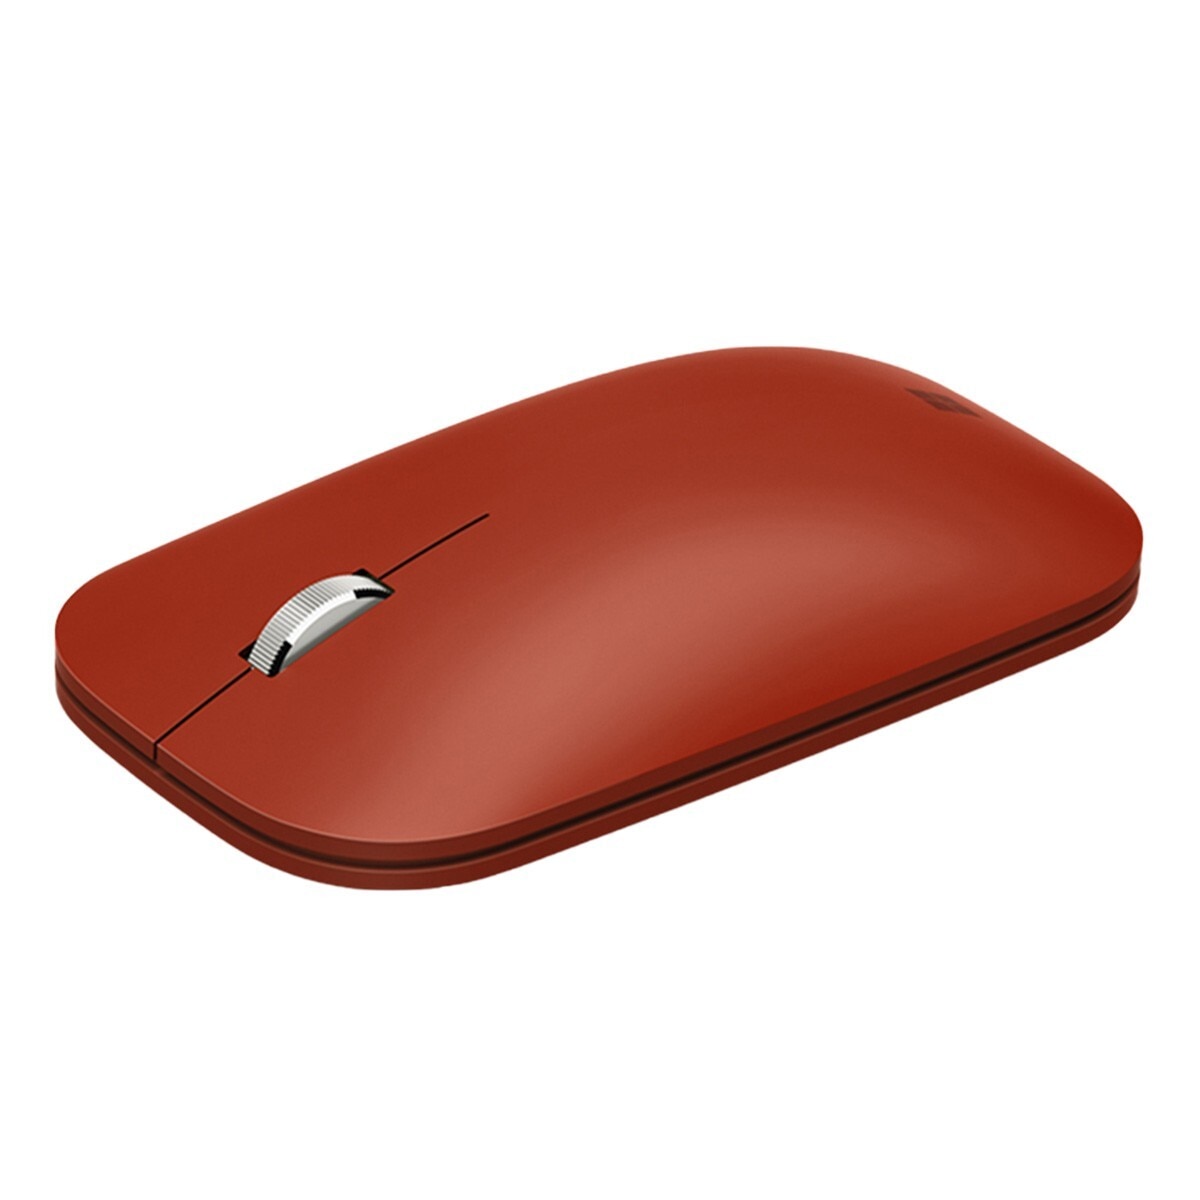 Microsoft Surface Mobile 滑鼠 罌粟紅 KGY-00059